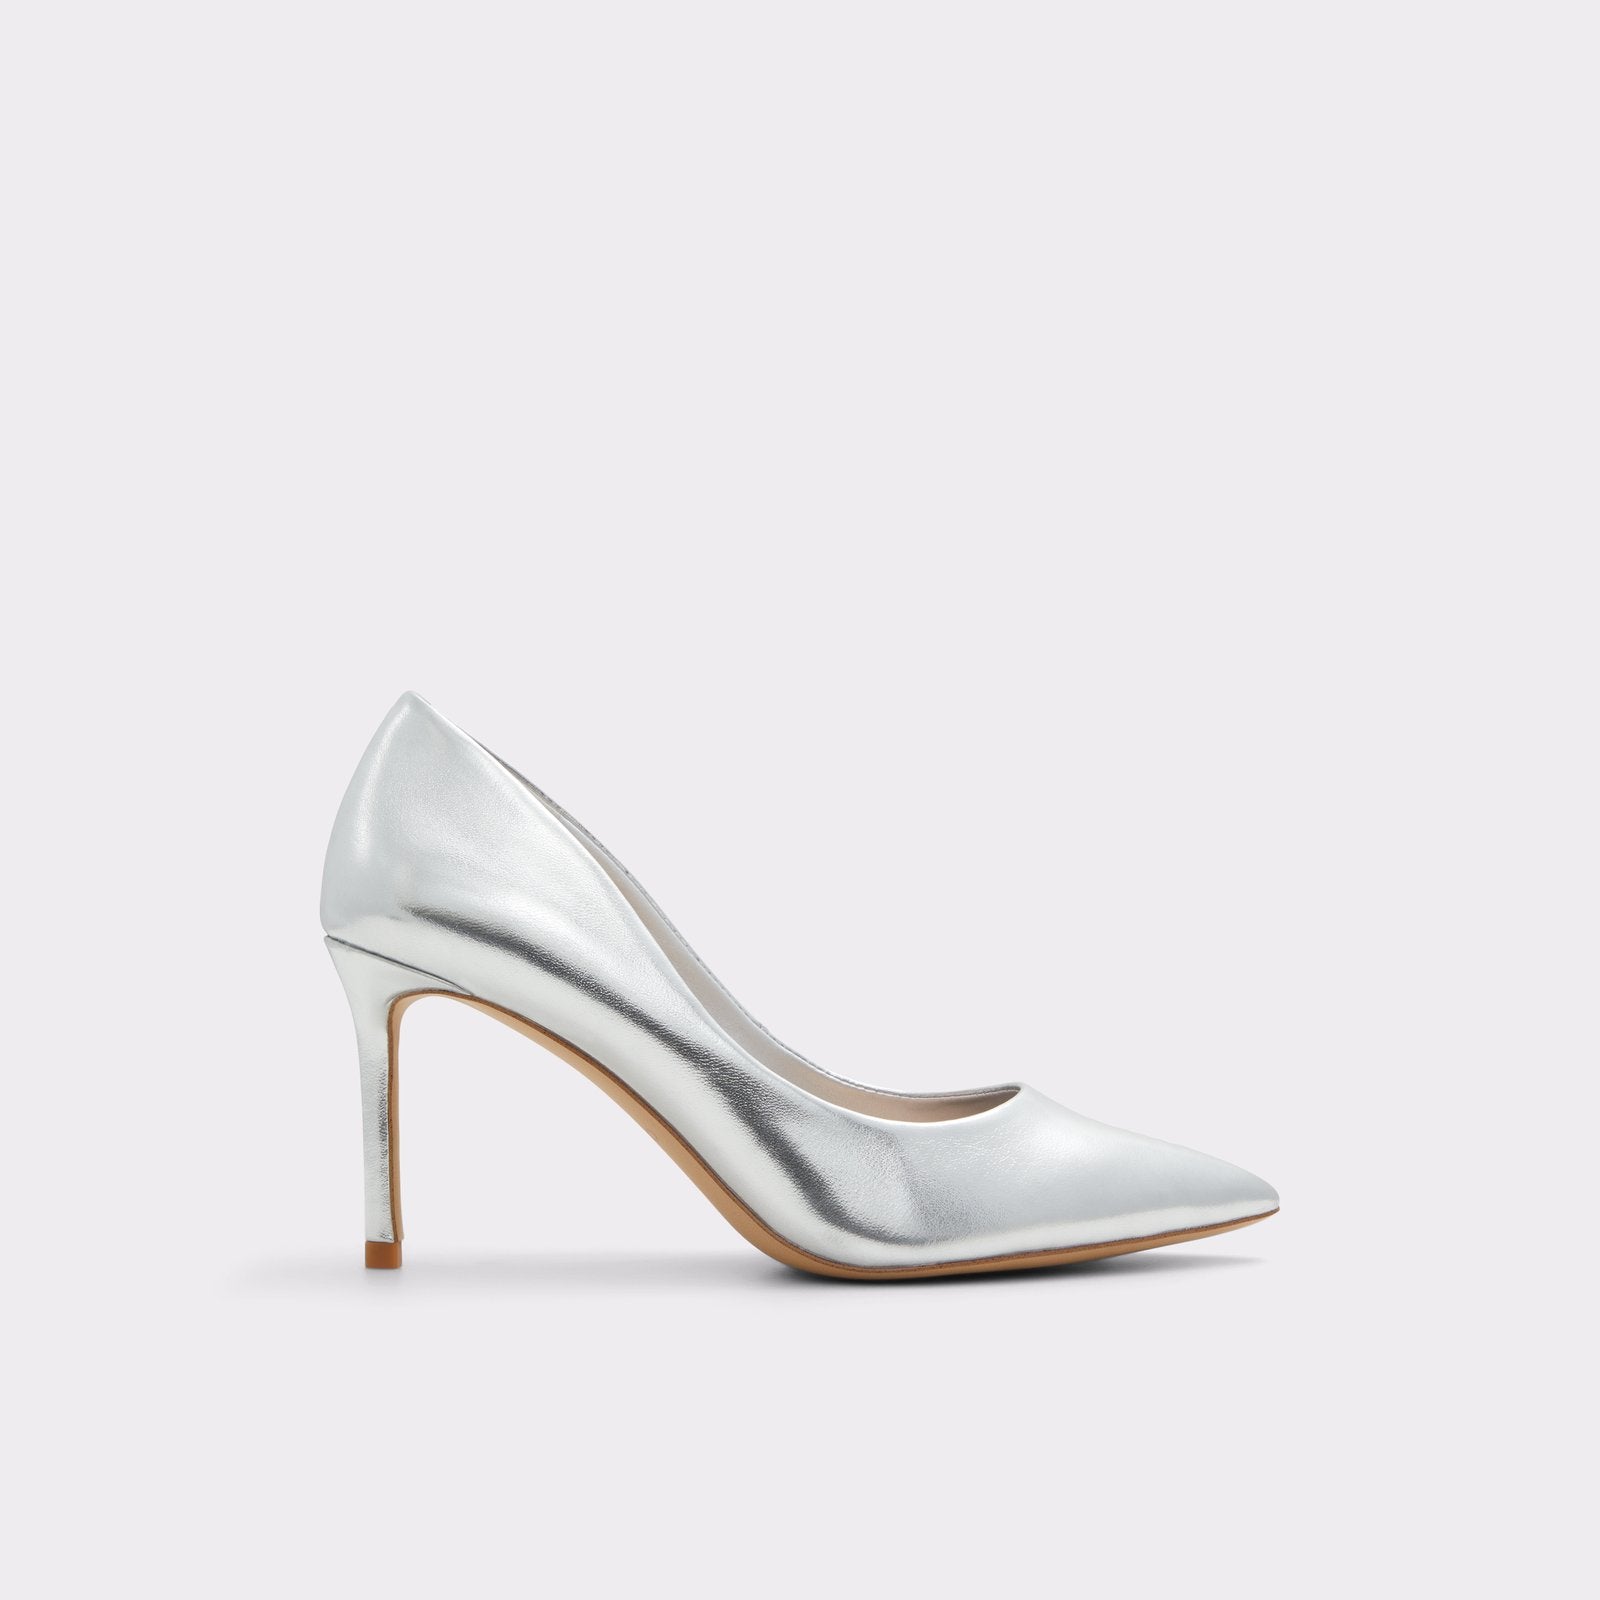 Stessymid / Heeled Women Shoes - Silver - ALDO KSA